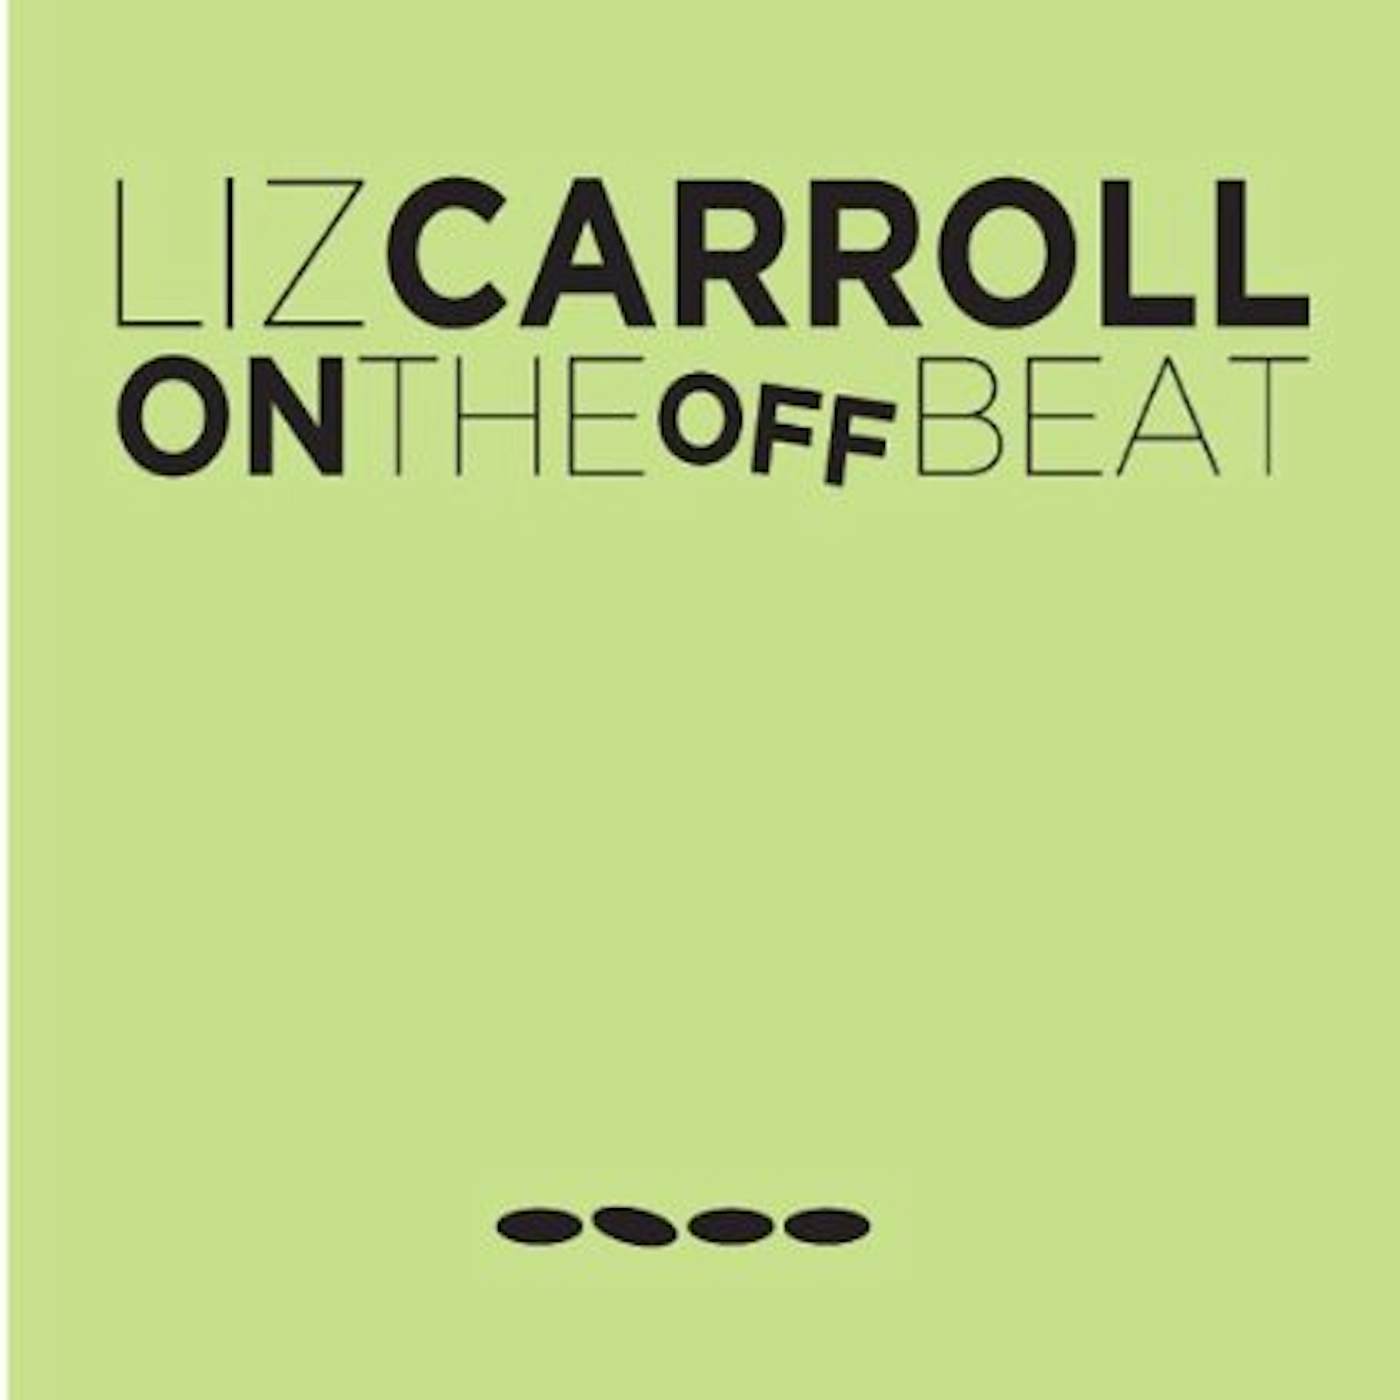 Liz Carroll ON THE OFFBEAT CD